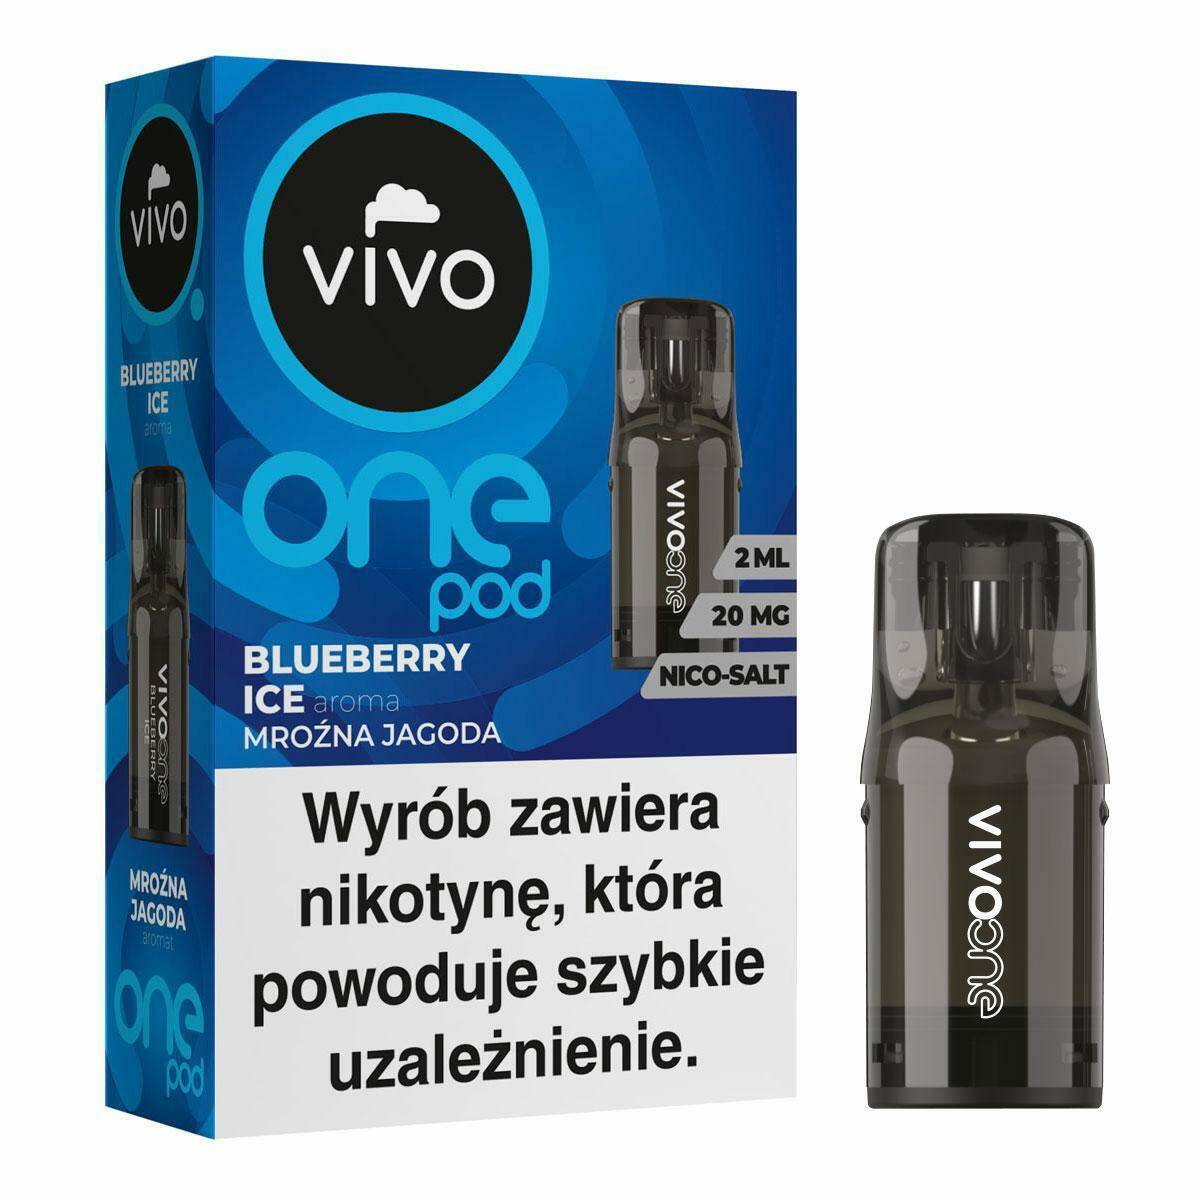 VIVO ONE POD - Blueberry Ice 20mg (2ml)